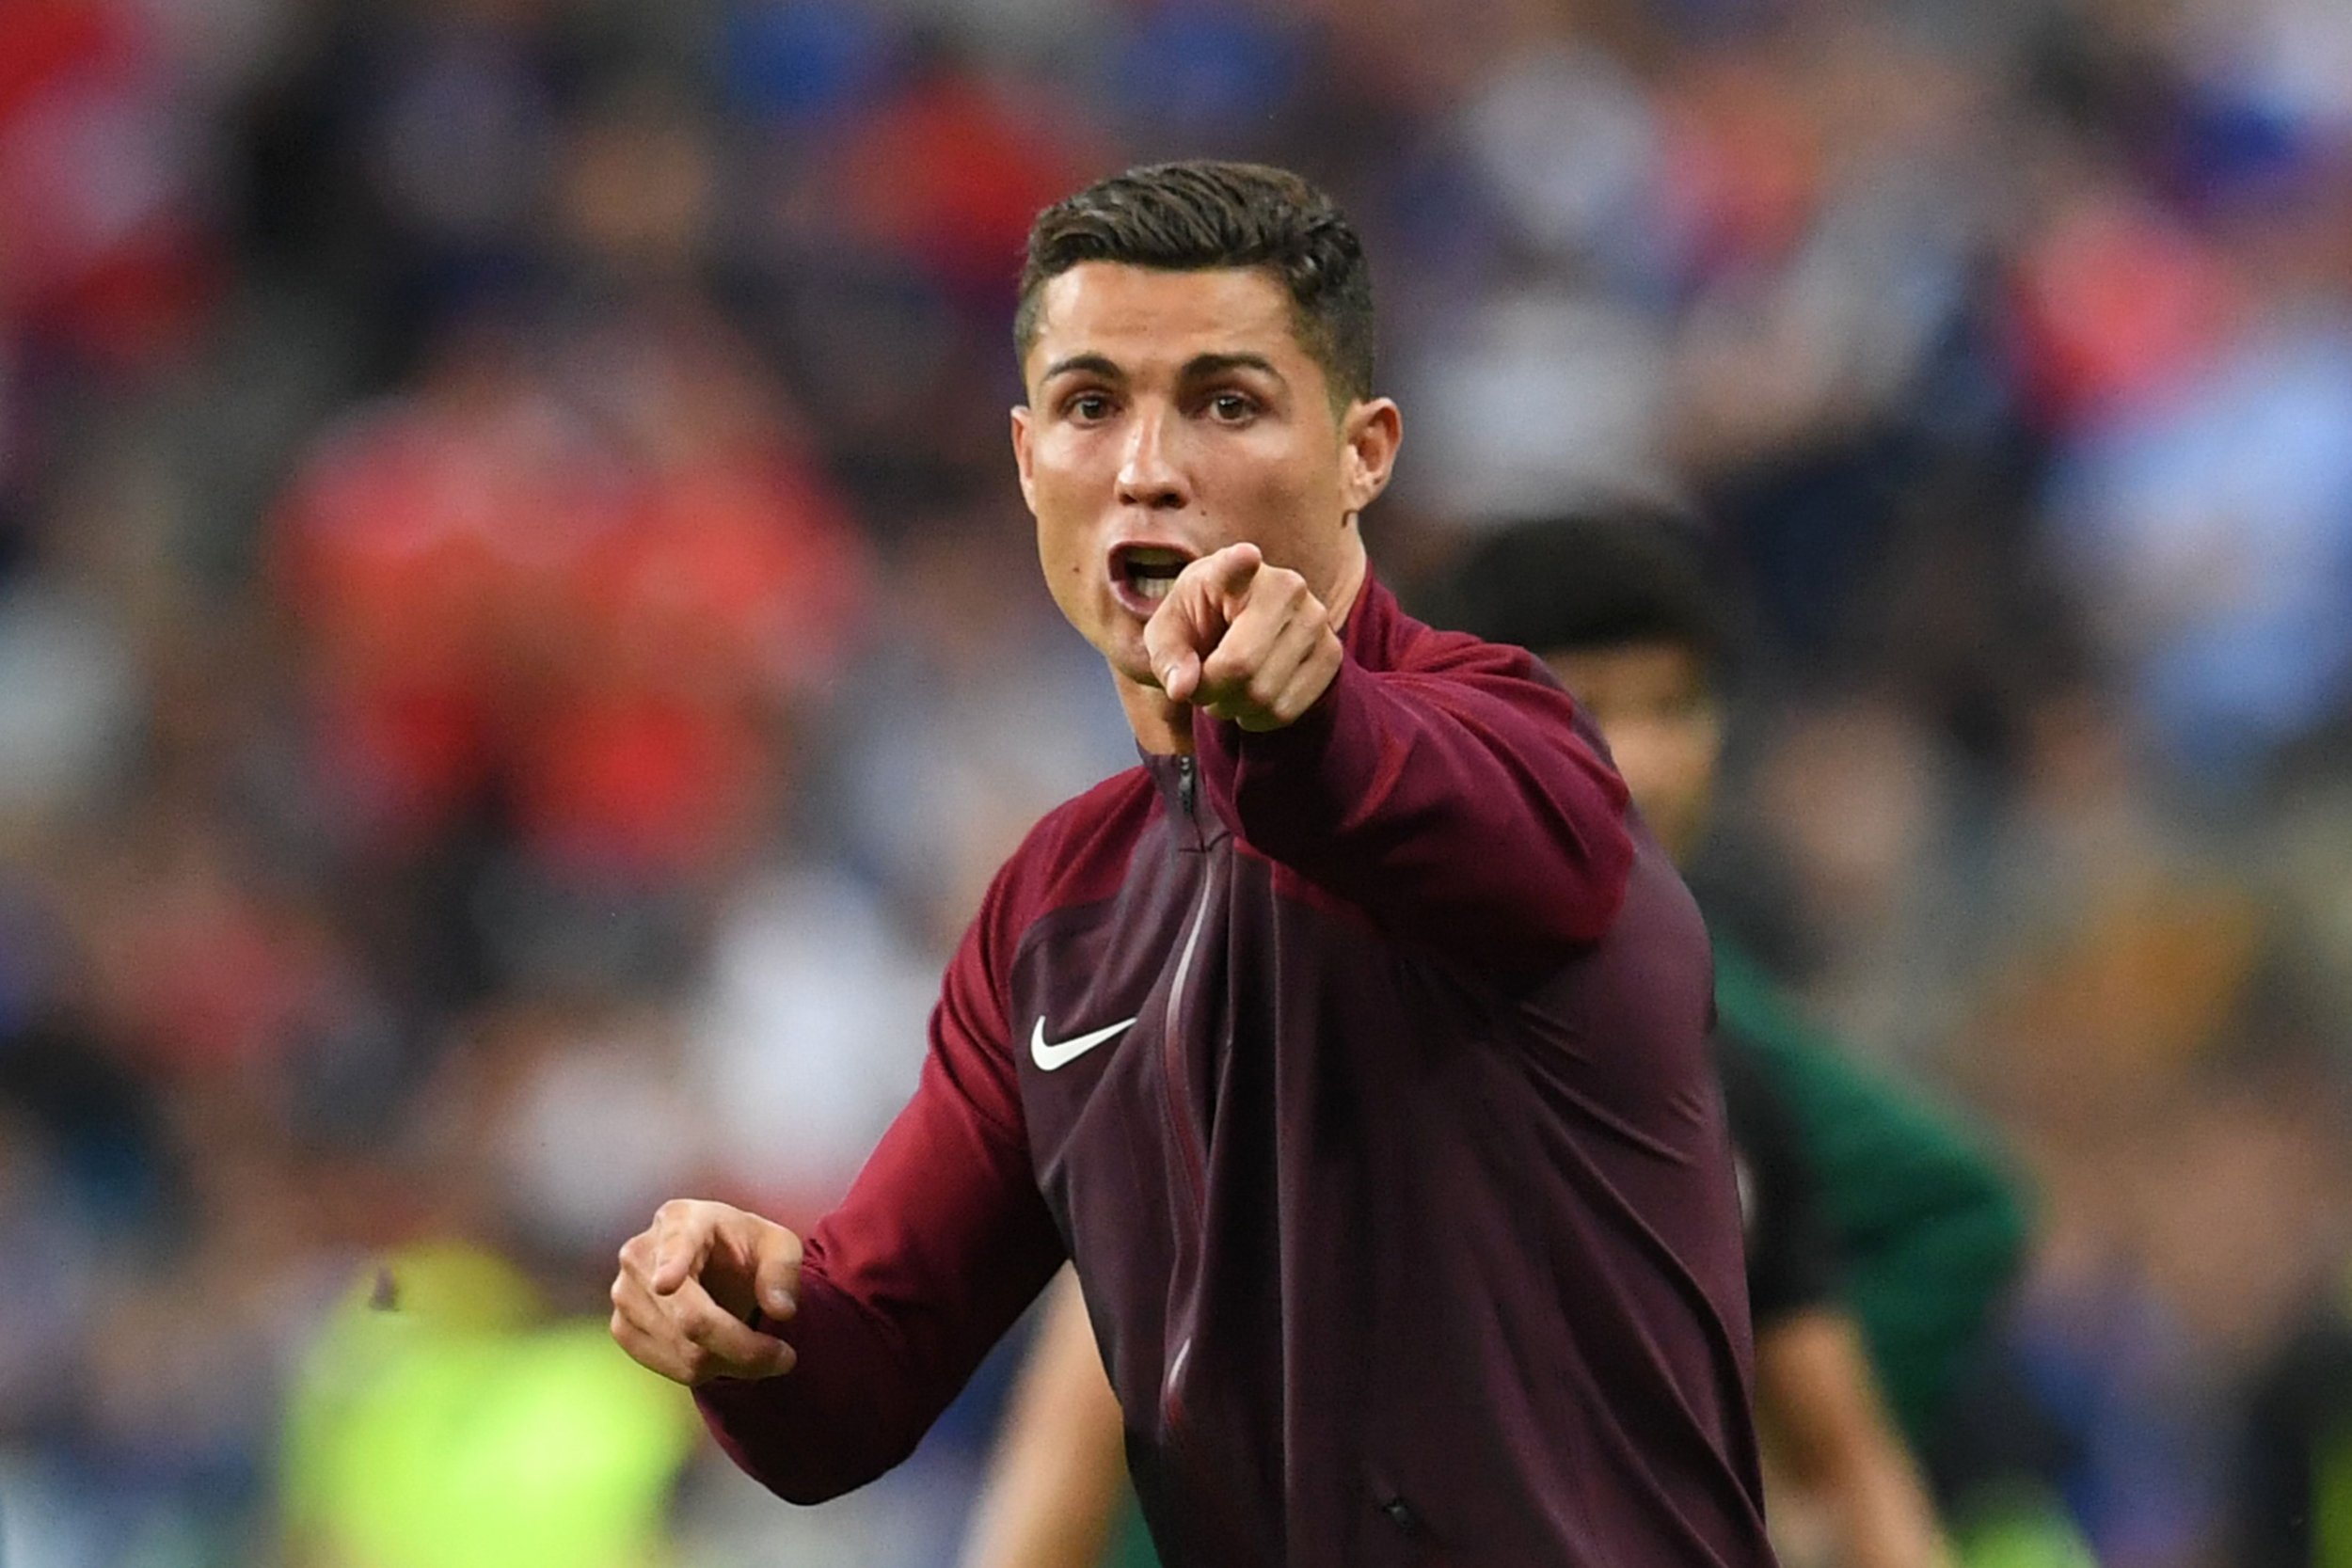 Cristiano Ronaldo during the Euro 2016 final.